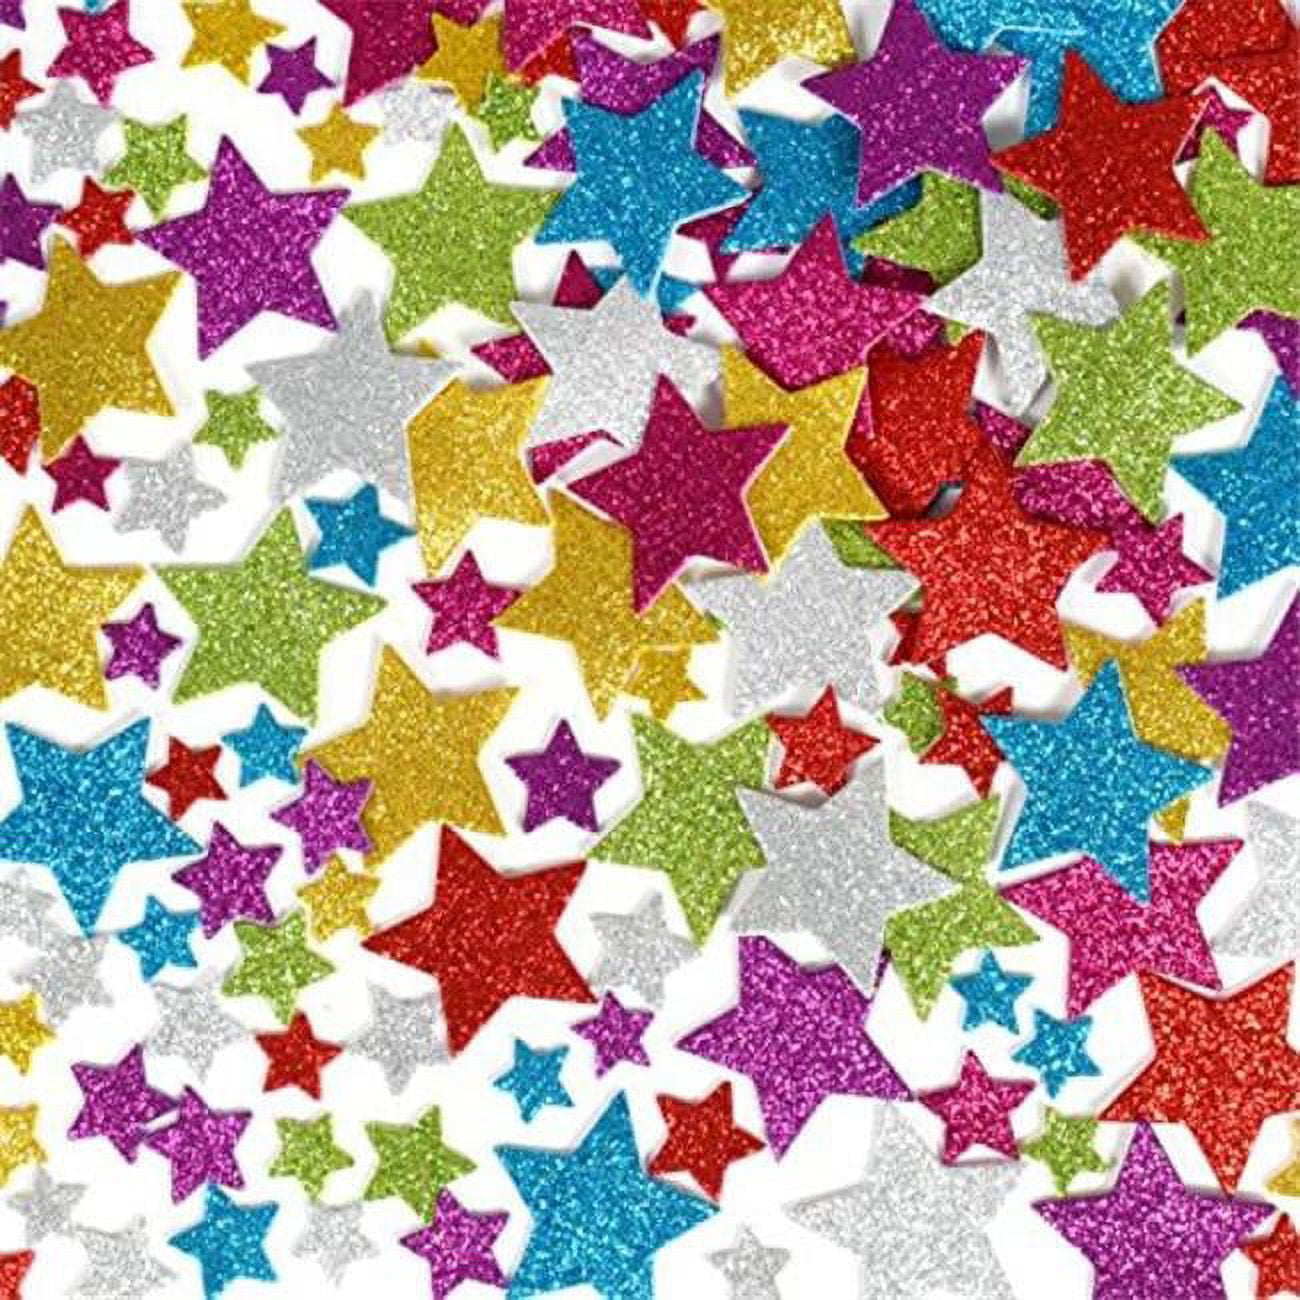 1Bag Colorful Self Adhesive Stars Shaped Foam Glitter Sticker